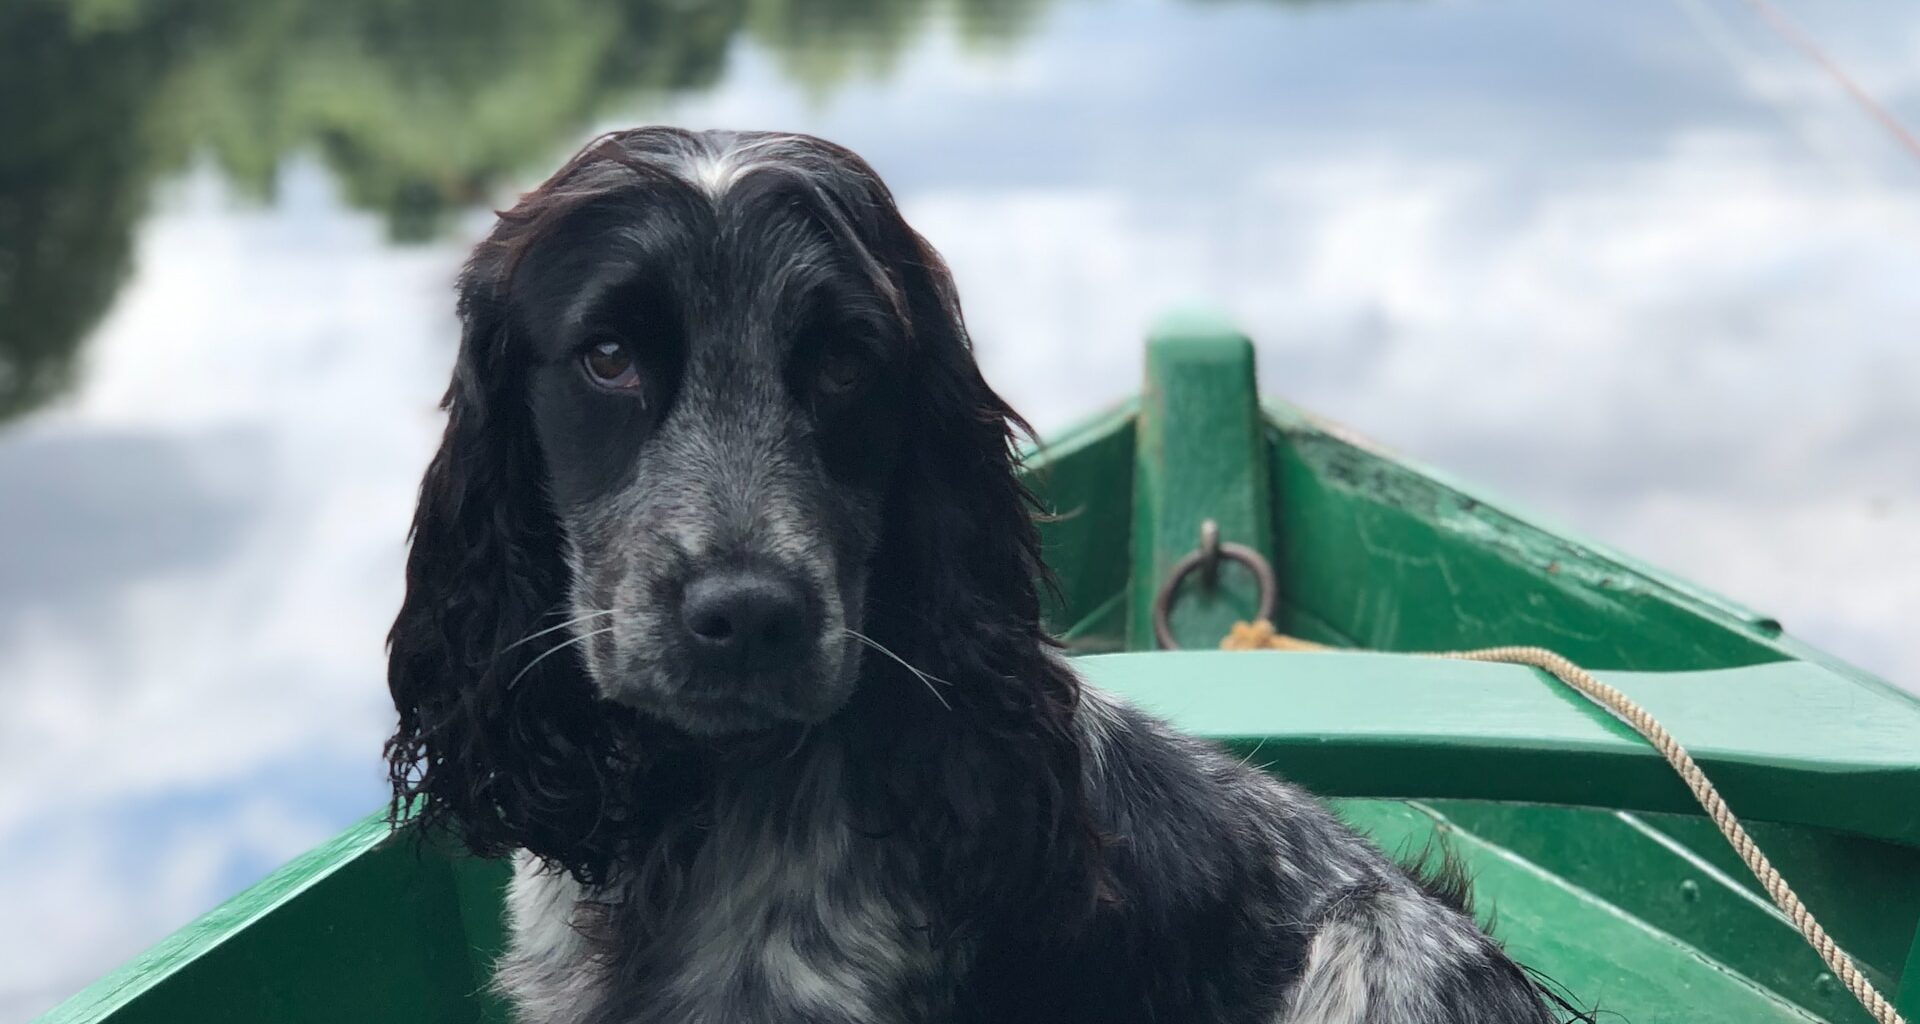 szaro-czarny pies na łódce